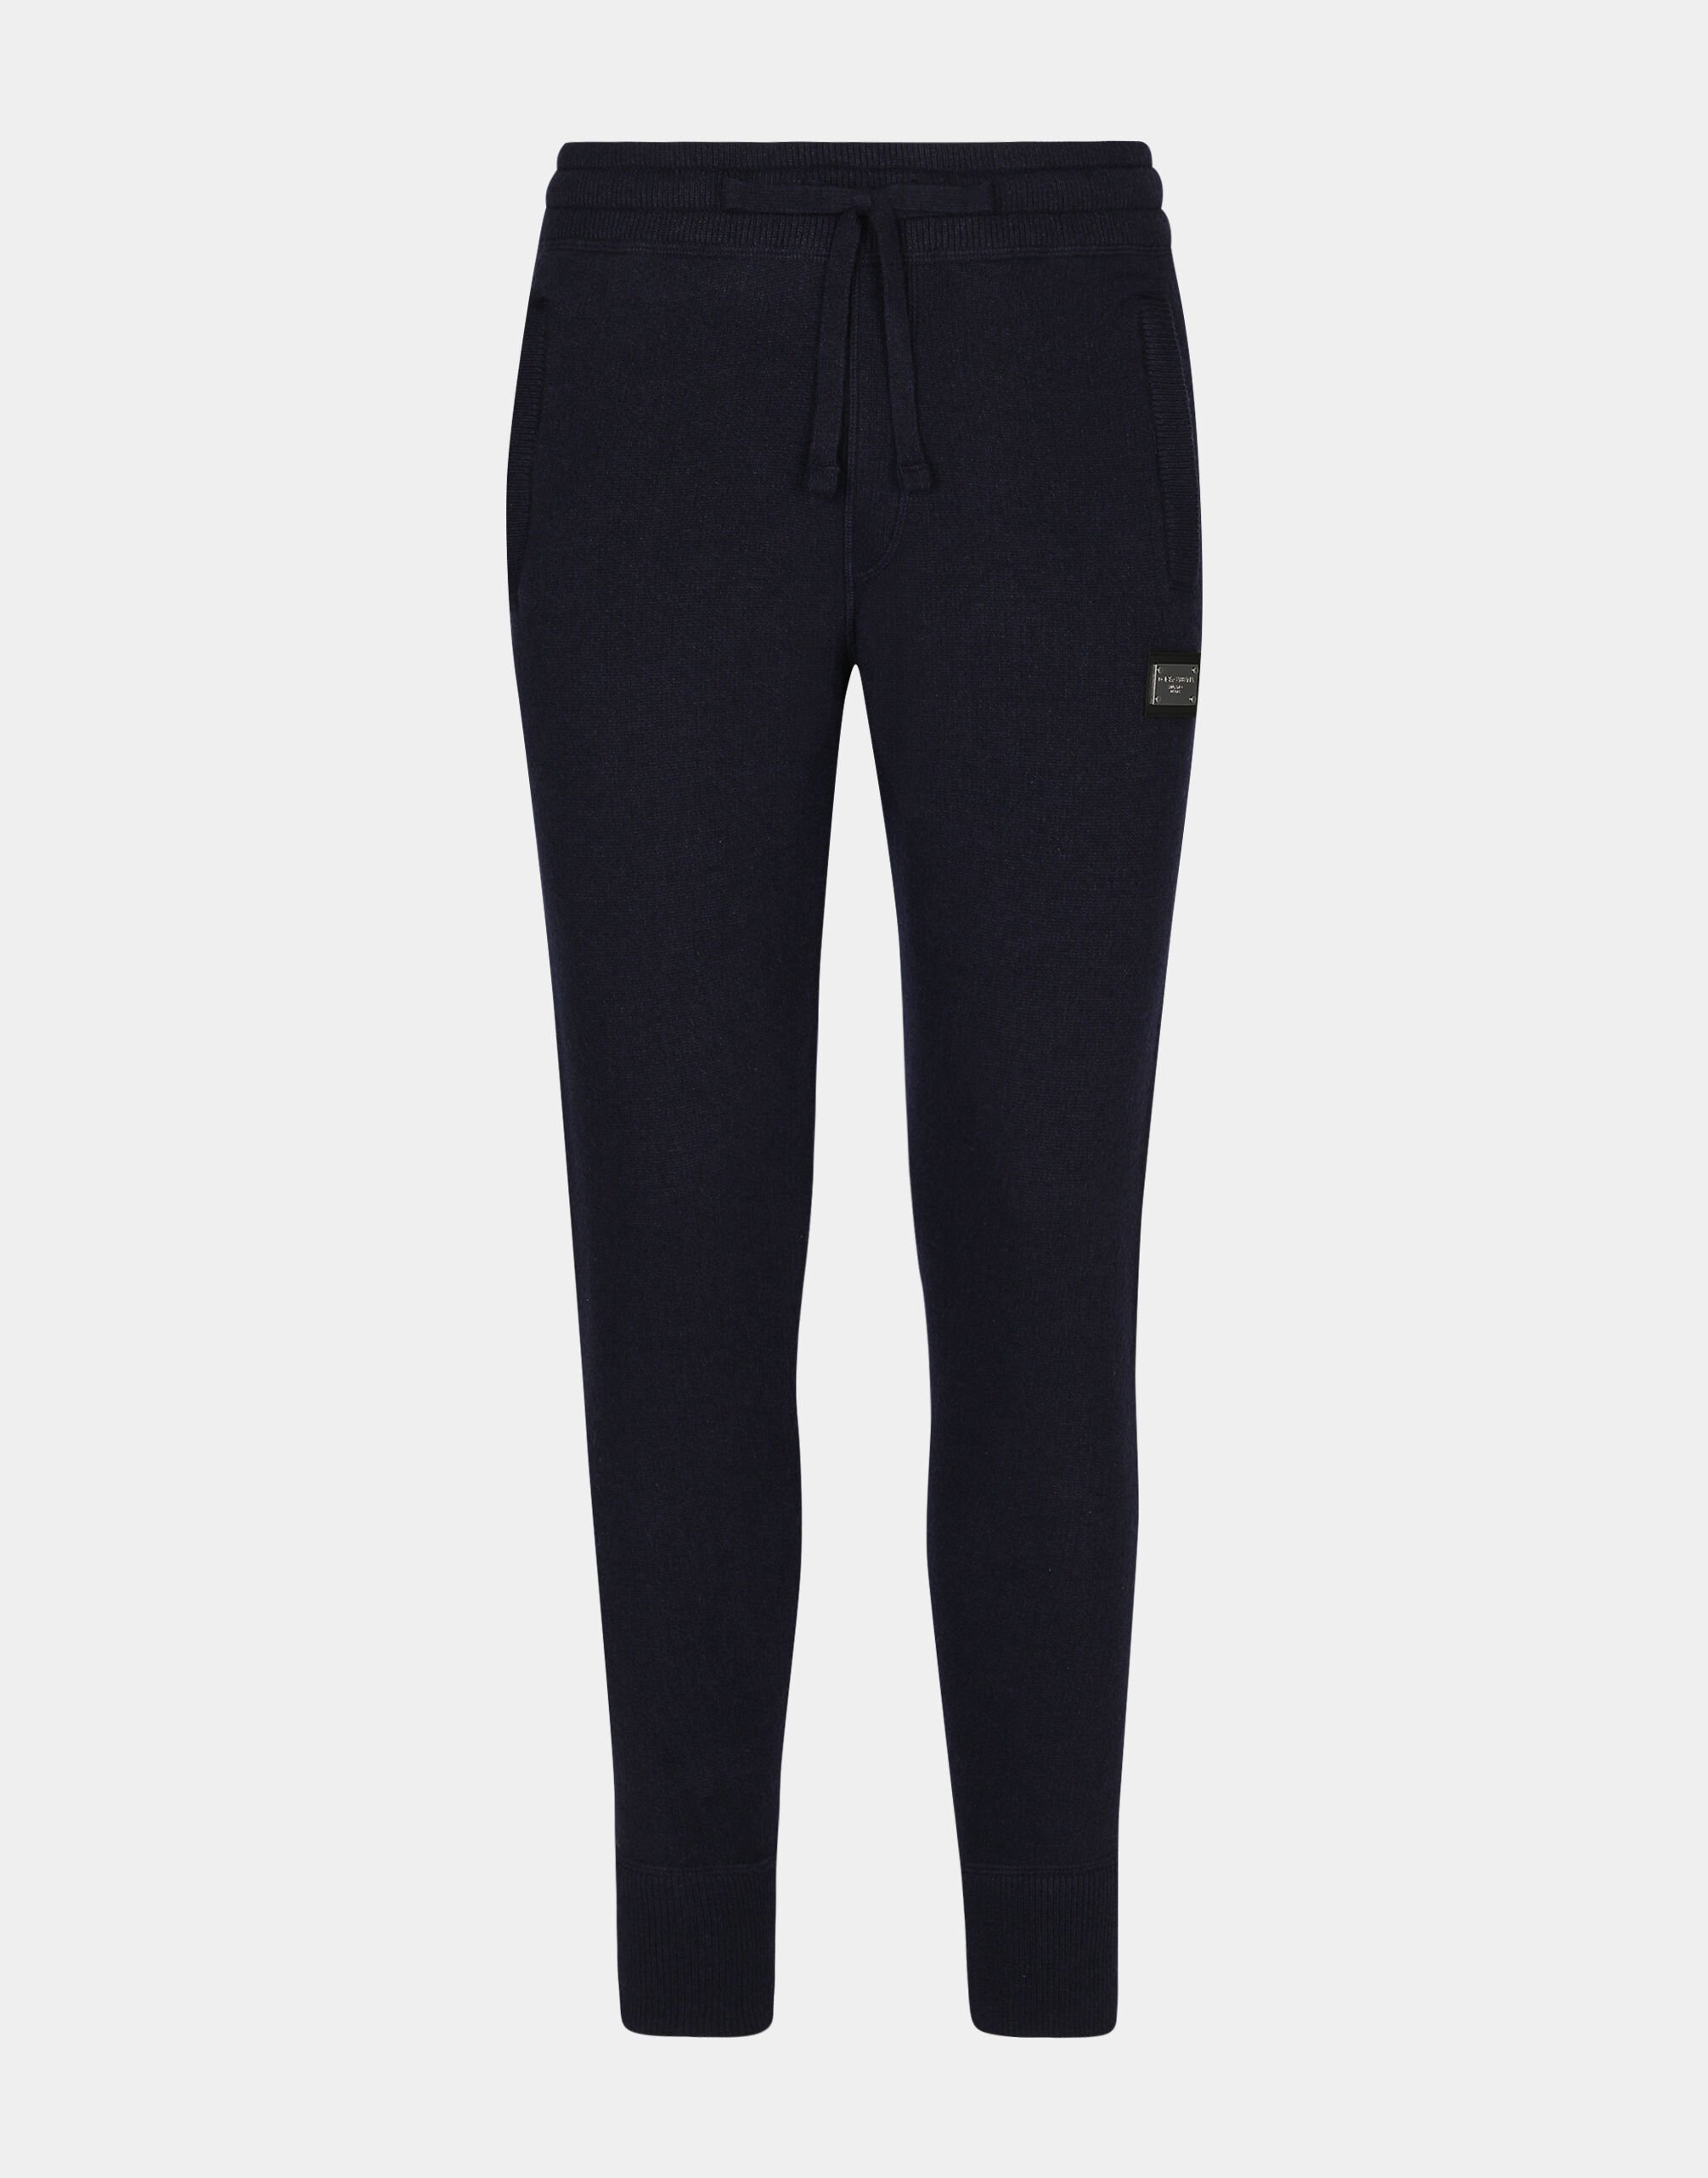 Dolce & Gabbana Wool and cashmere knit jogging pants Grey GXP80TJFMK7